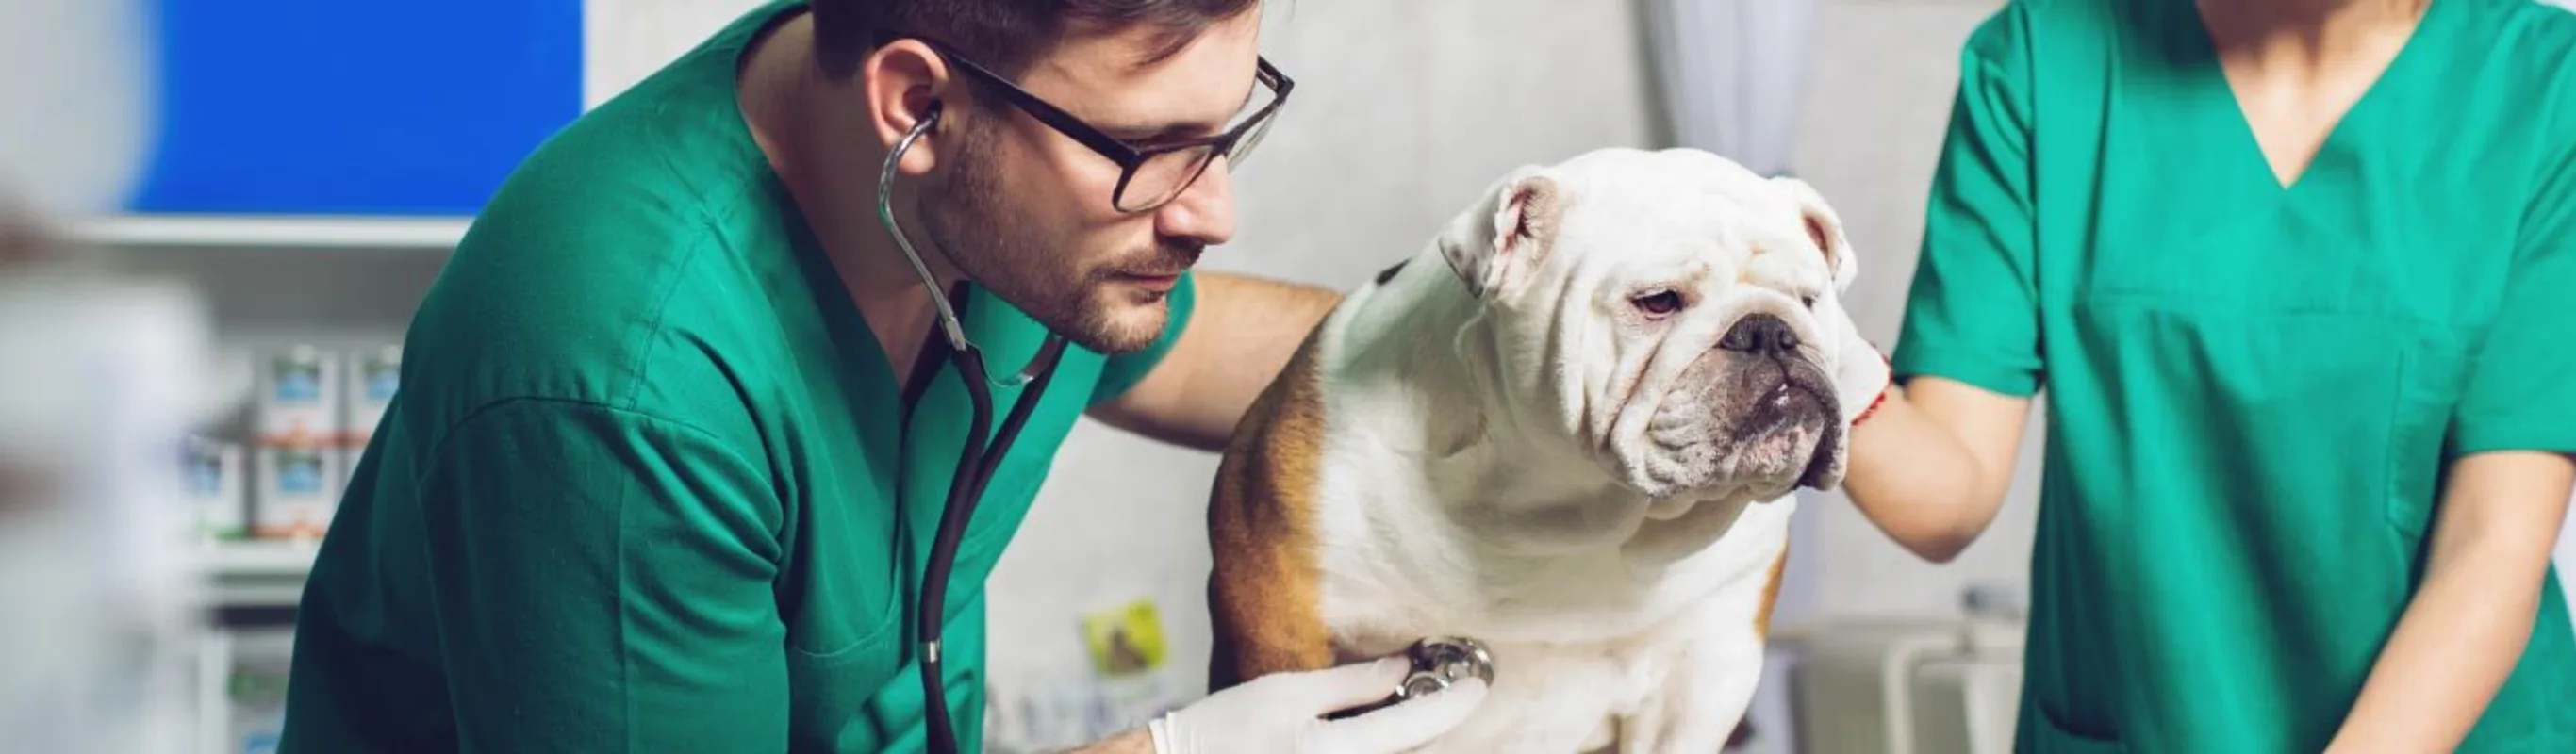 Veterinary staff examining a dog